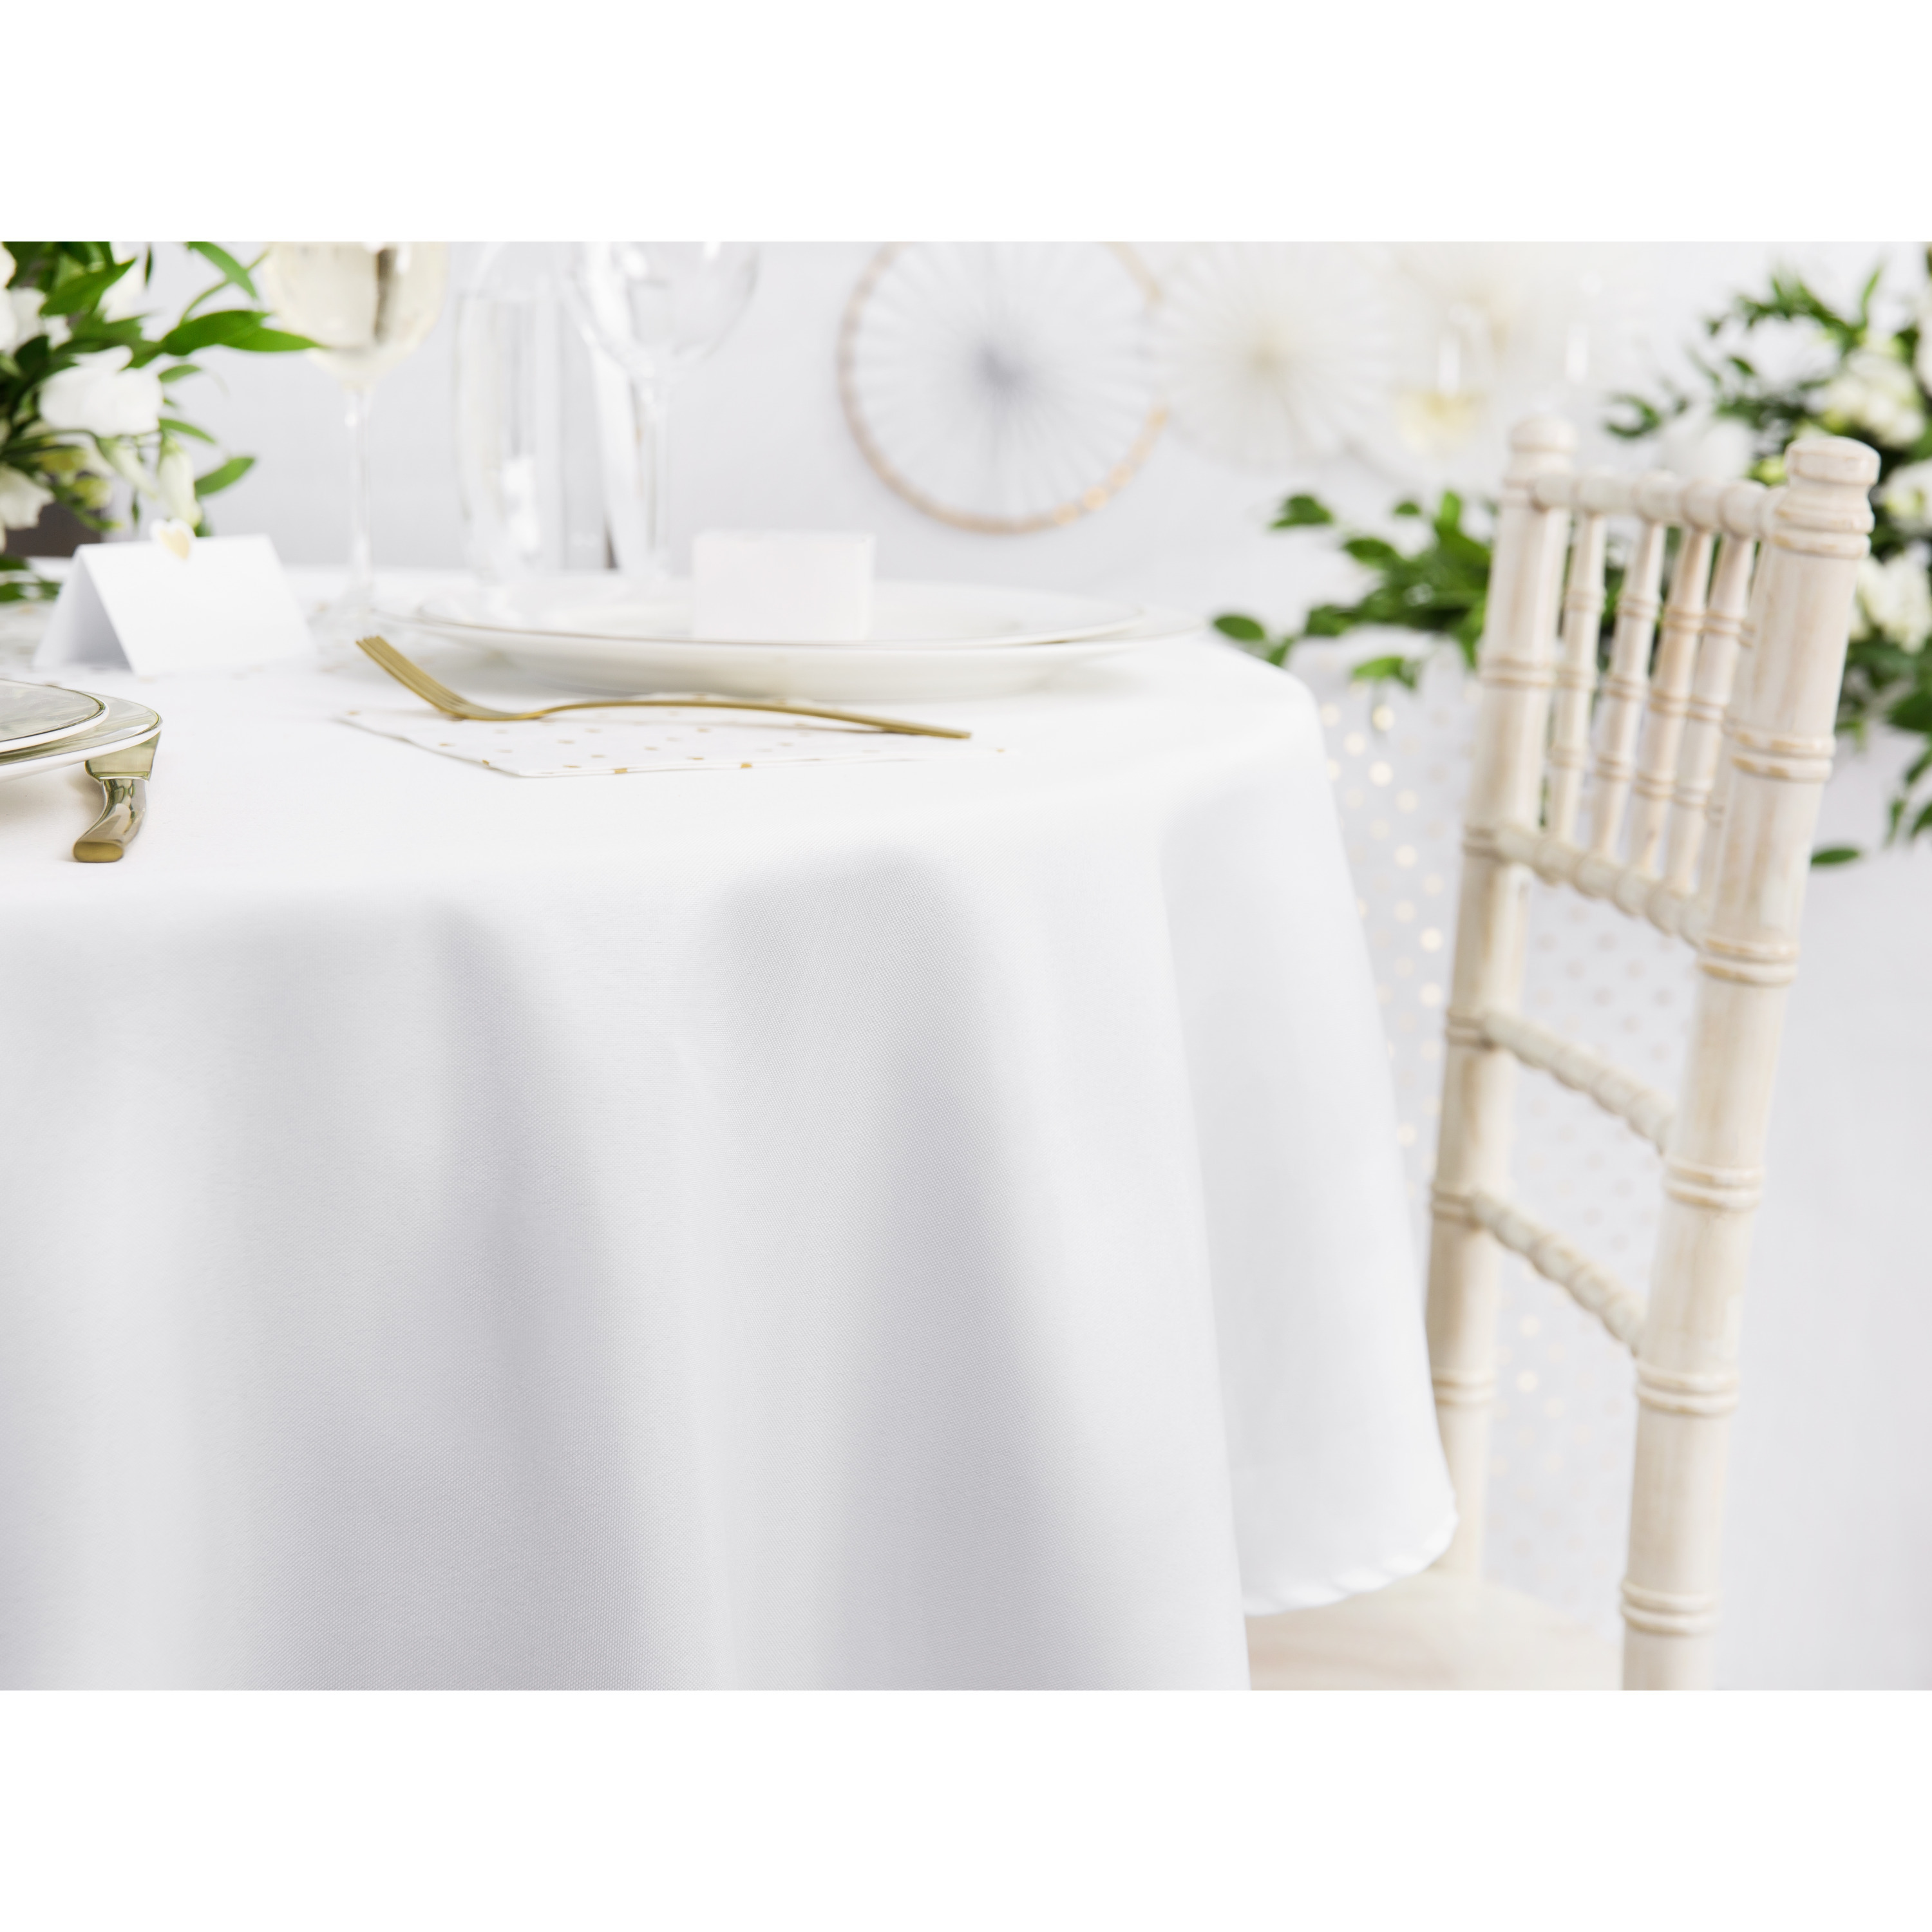 PartyDeco Tafelkleed/tafellaken rond - wit - 230 cm - polyester - Bruiloft tafelkleden -